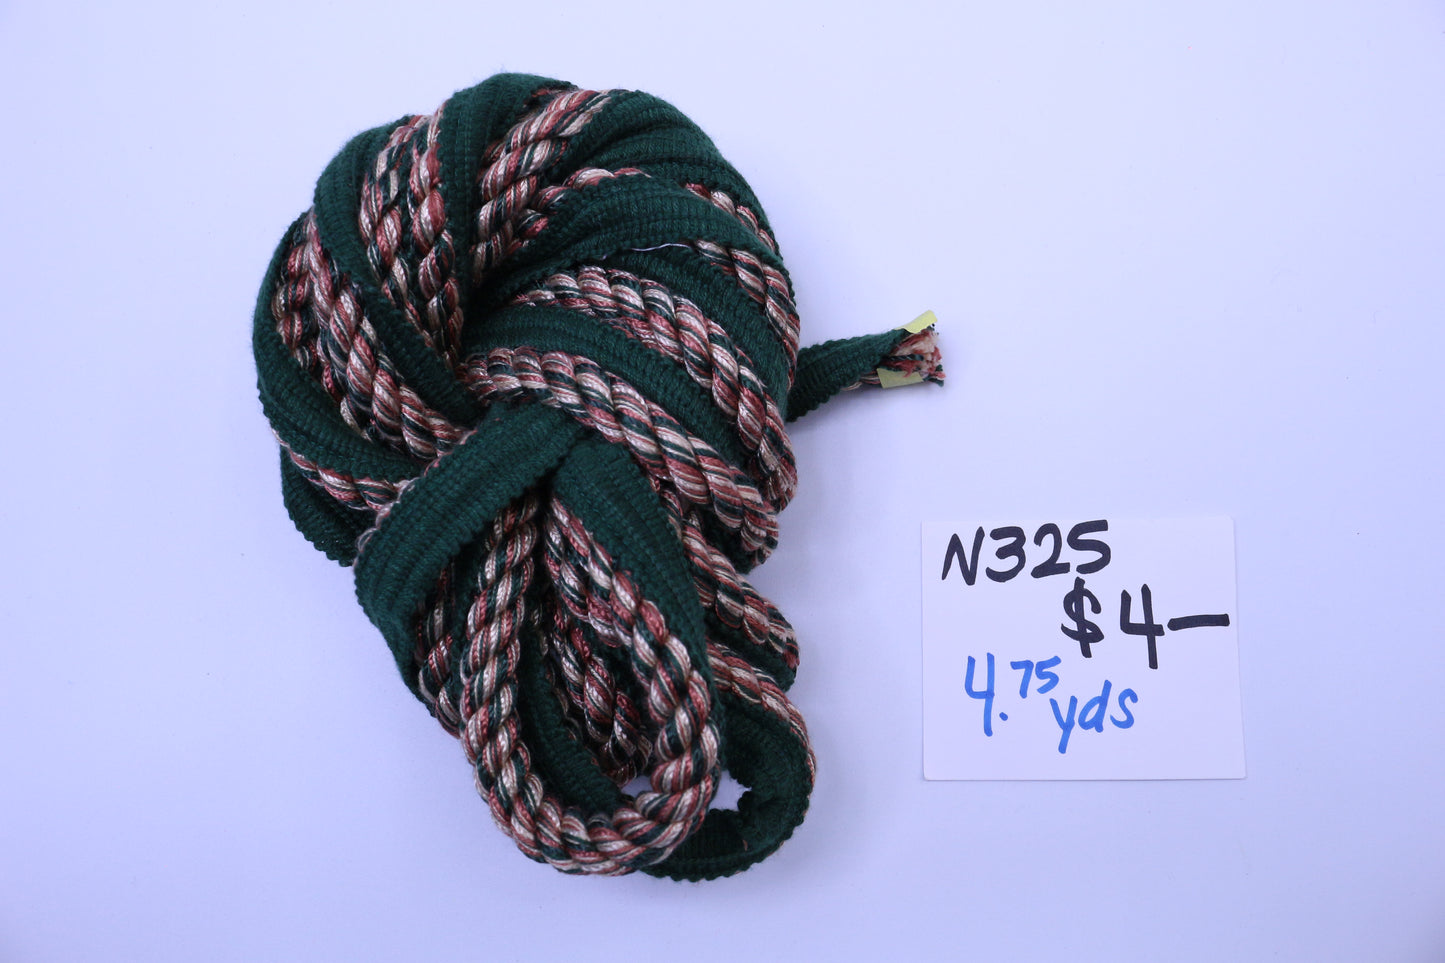 Neutral Braided Rope Trim 4.75 yds